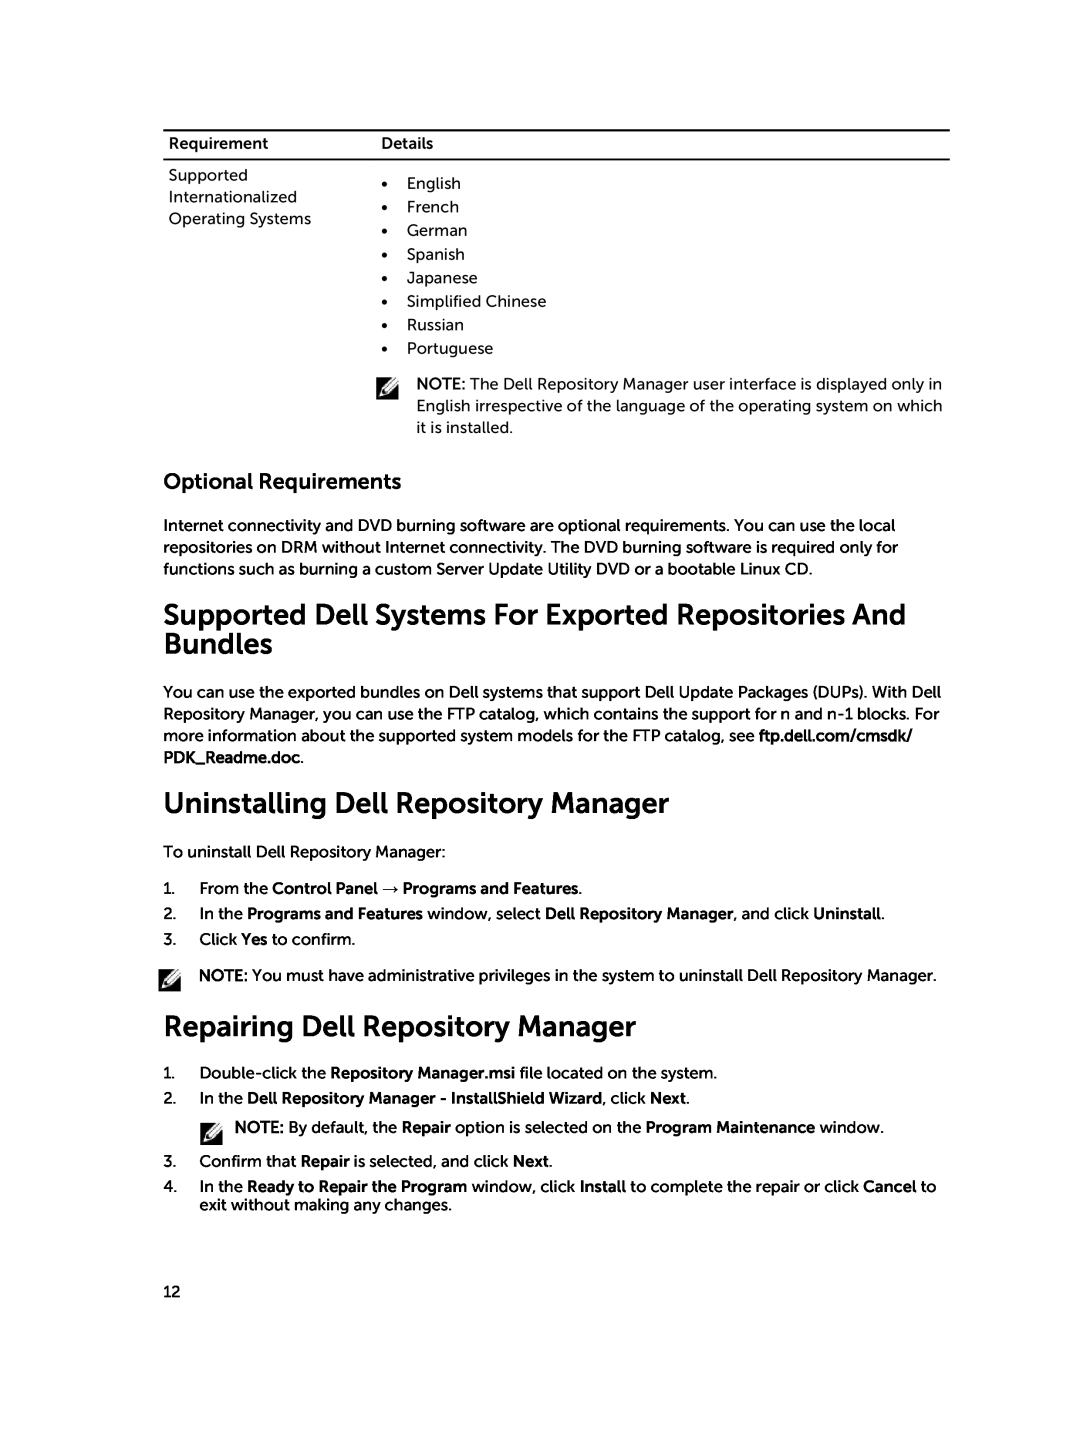 Dell 1.8 manual Uninstalling Dell Repository Manager, Repairing Dell Repository Manager, Optional Requirements 